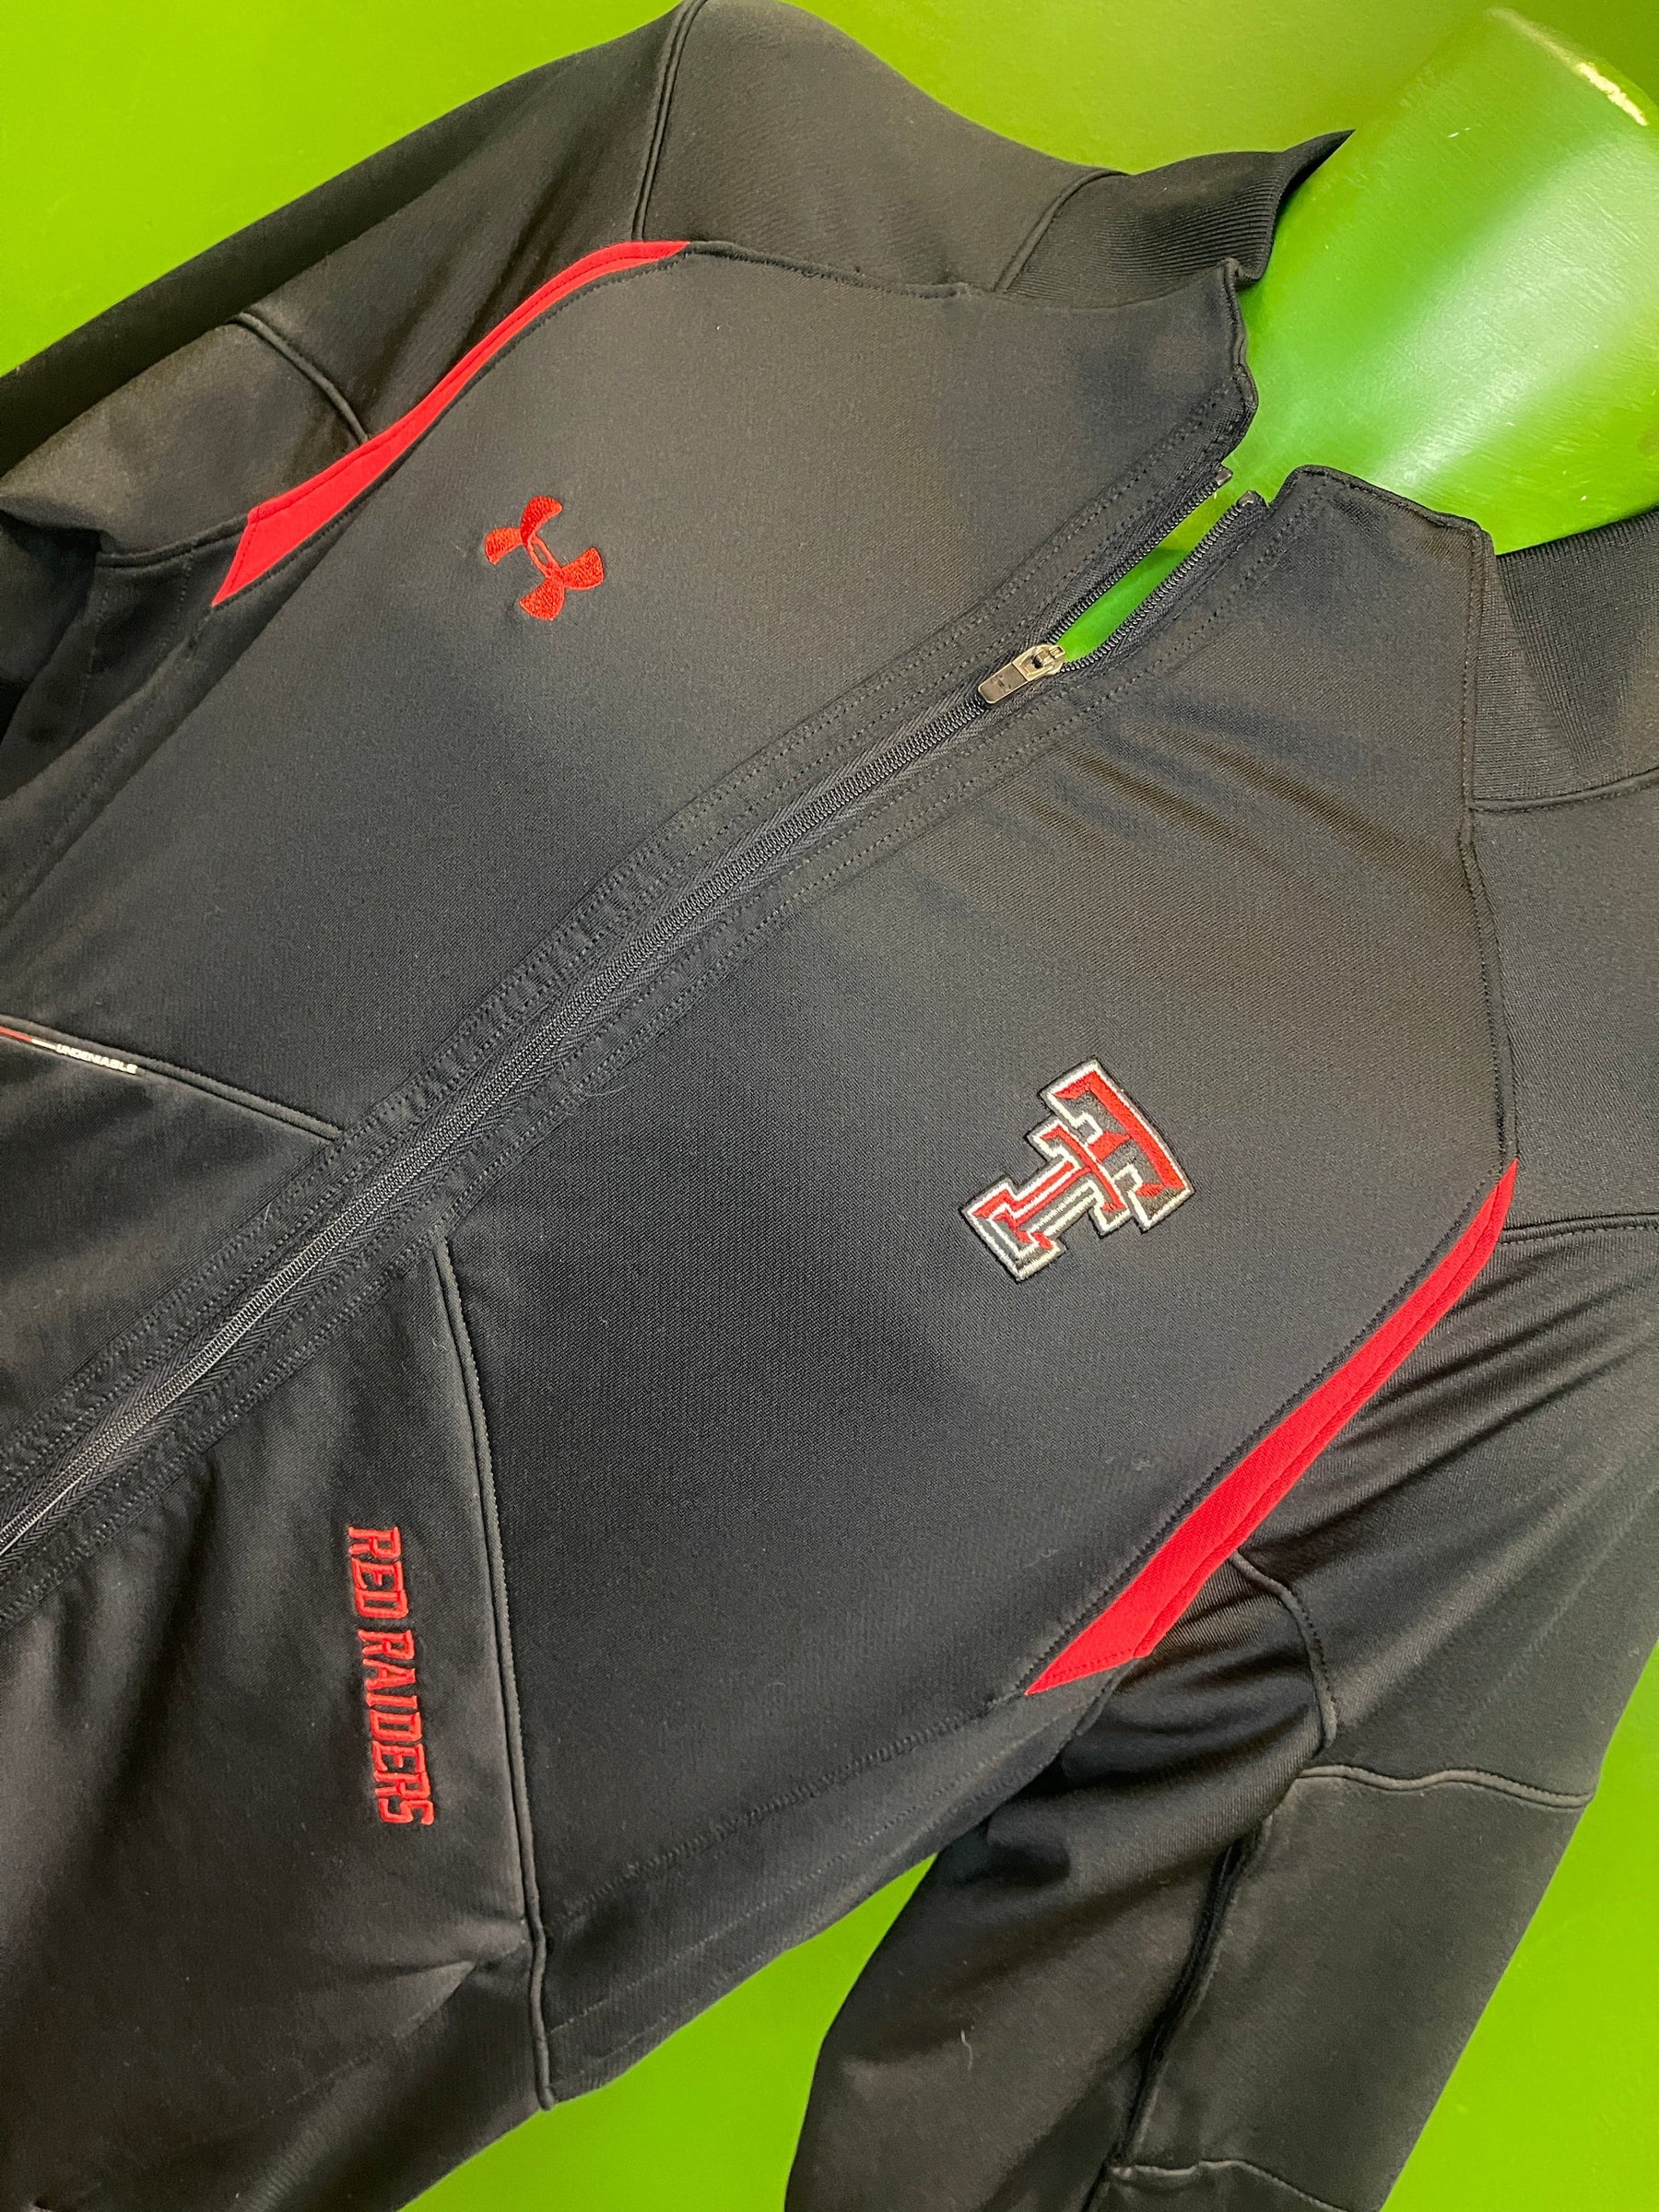 NCAA Texas Tech Red Raiders Under Armour Full Zip Jacket Men's Medium